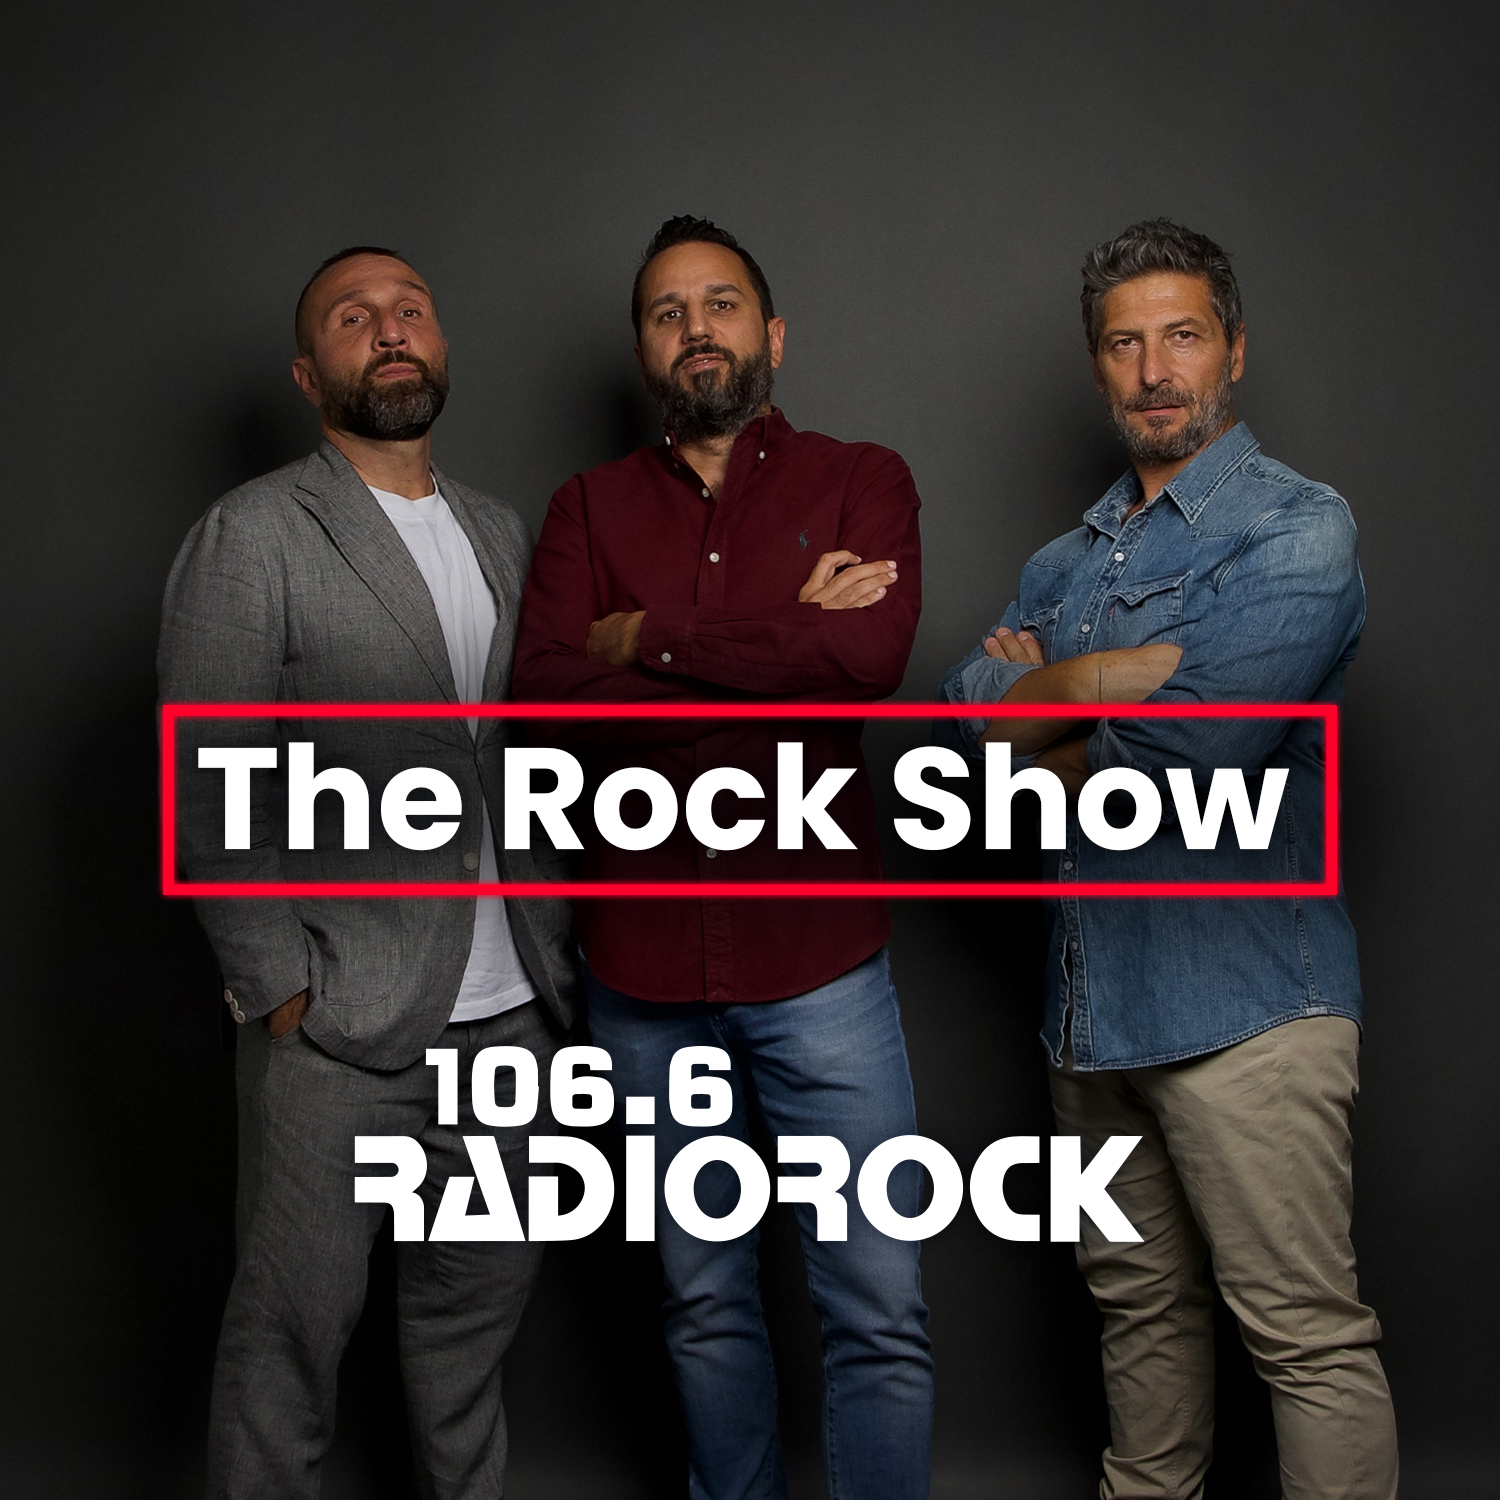 The Rock Show - S07E042: I giovani amano Fellini? (02-11-23)